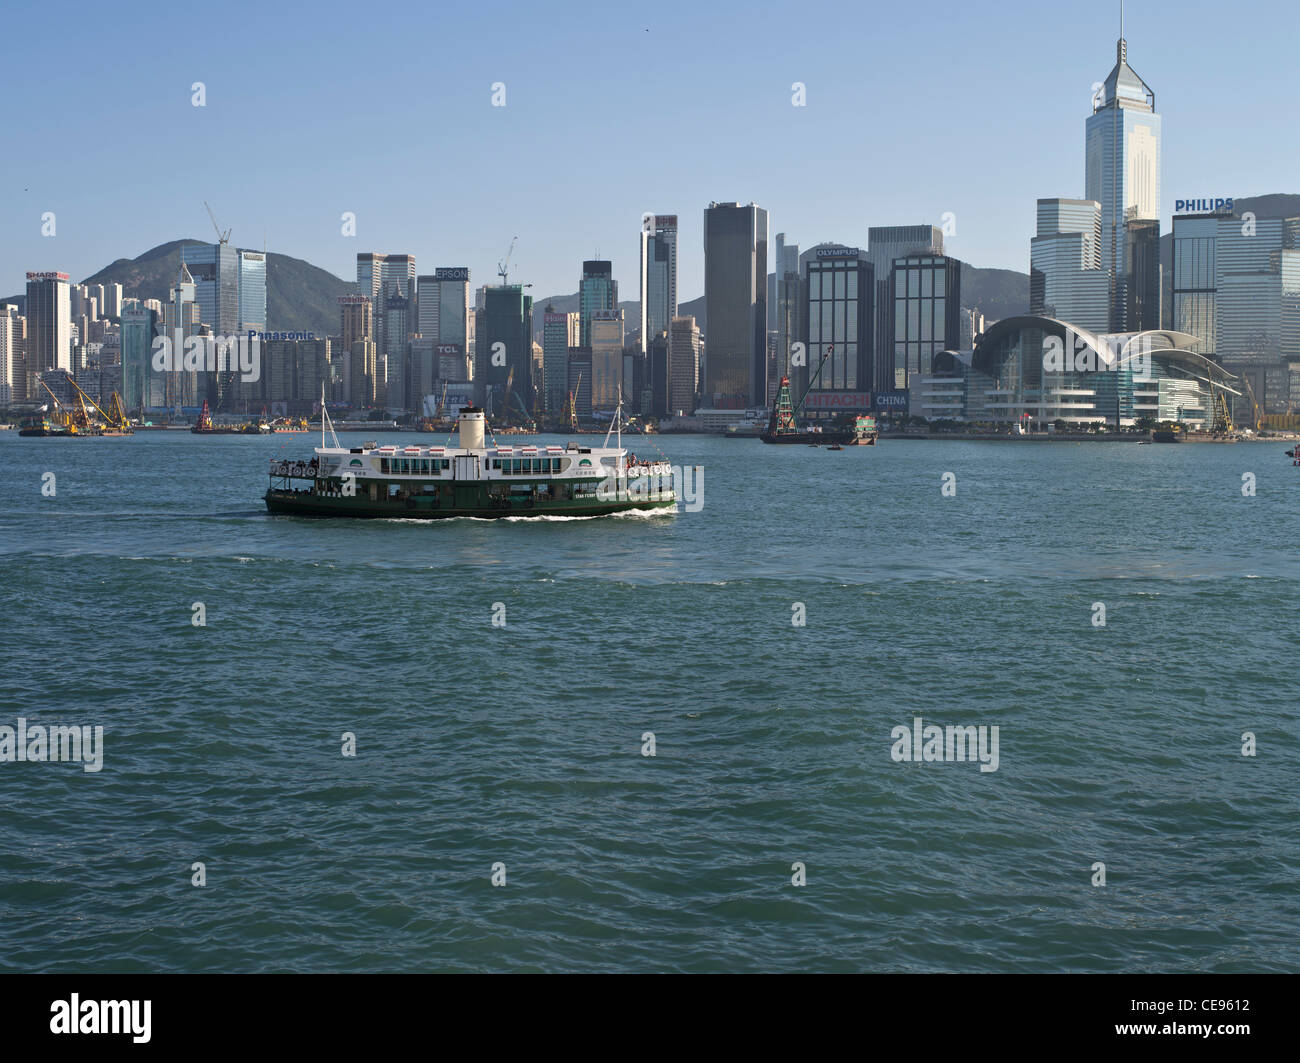 Dh PORTO DI HONG KONG HONG KONG Star Ferry Shing Star gite turistiche dell'isola di Hong Kong edifici sul lungomare Foto Stock